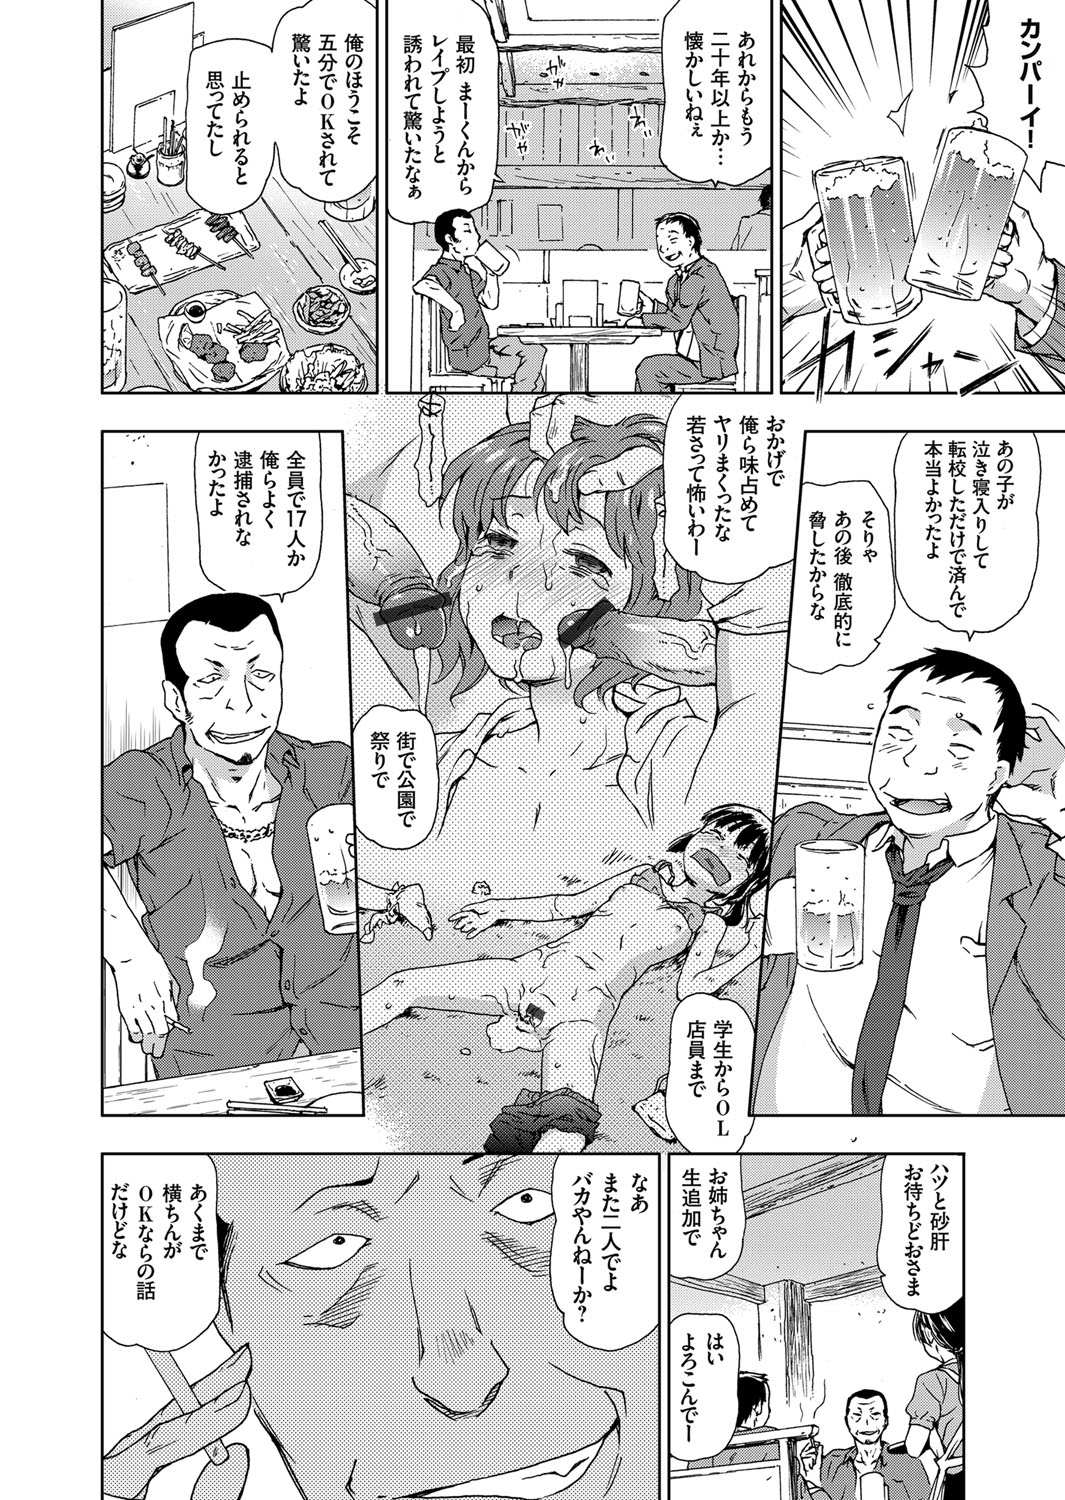 COMIC Grape Vol. 11 - Page 9 - HentaiEra